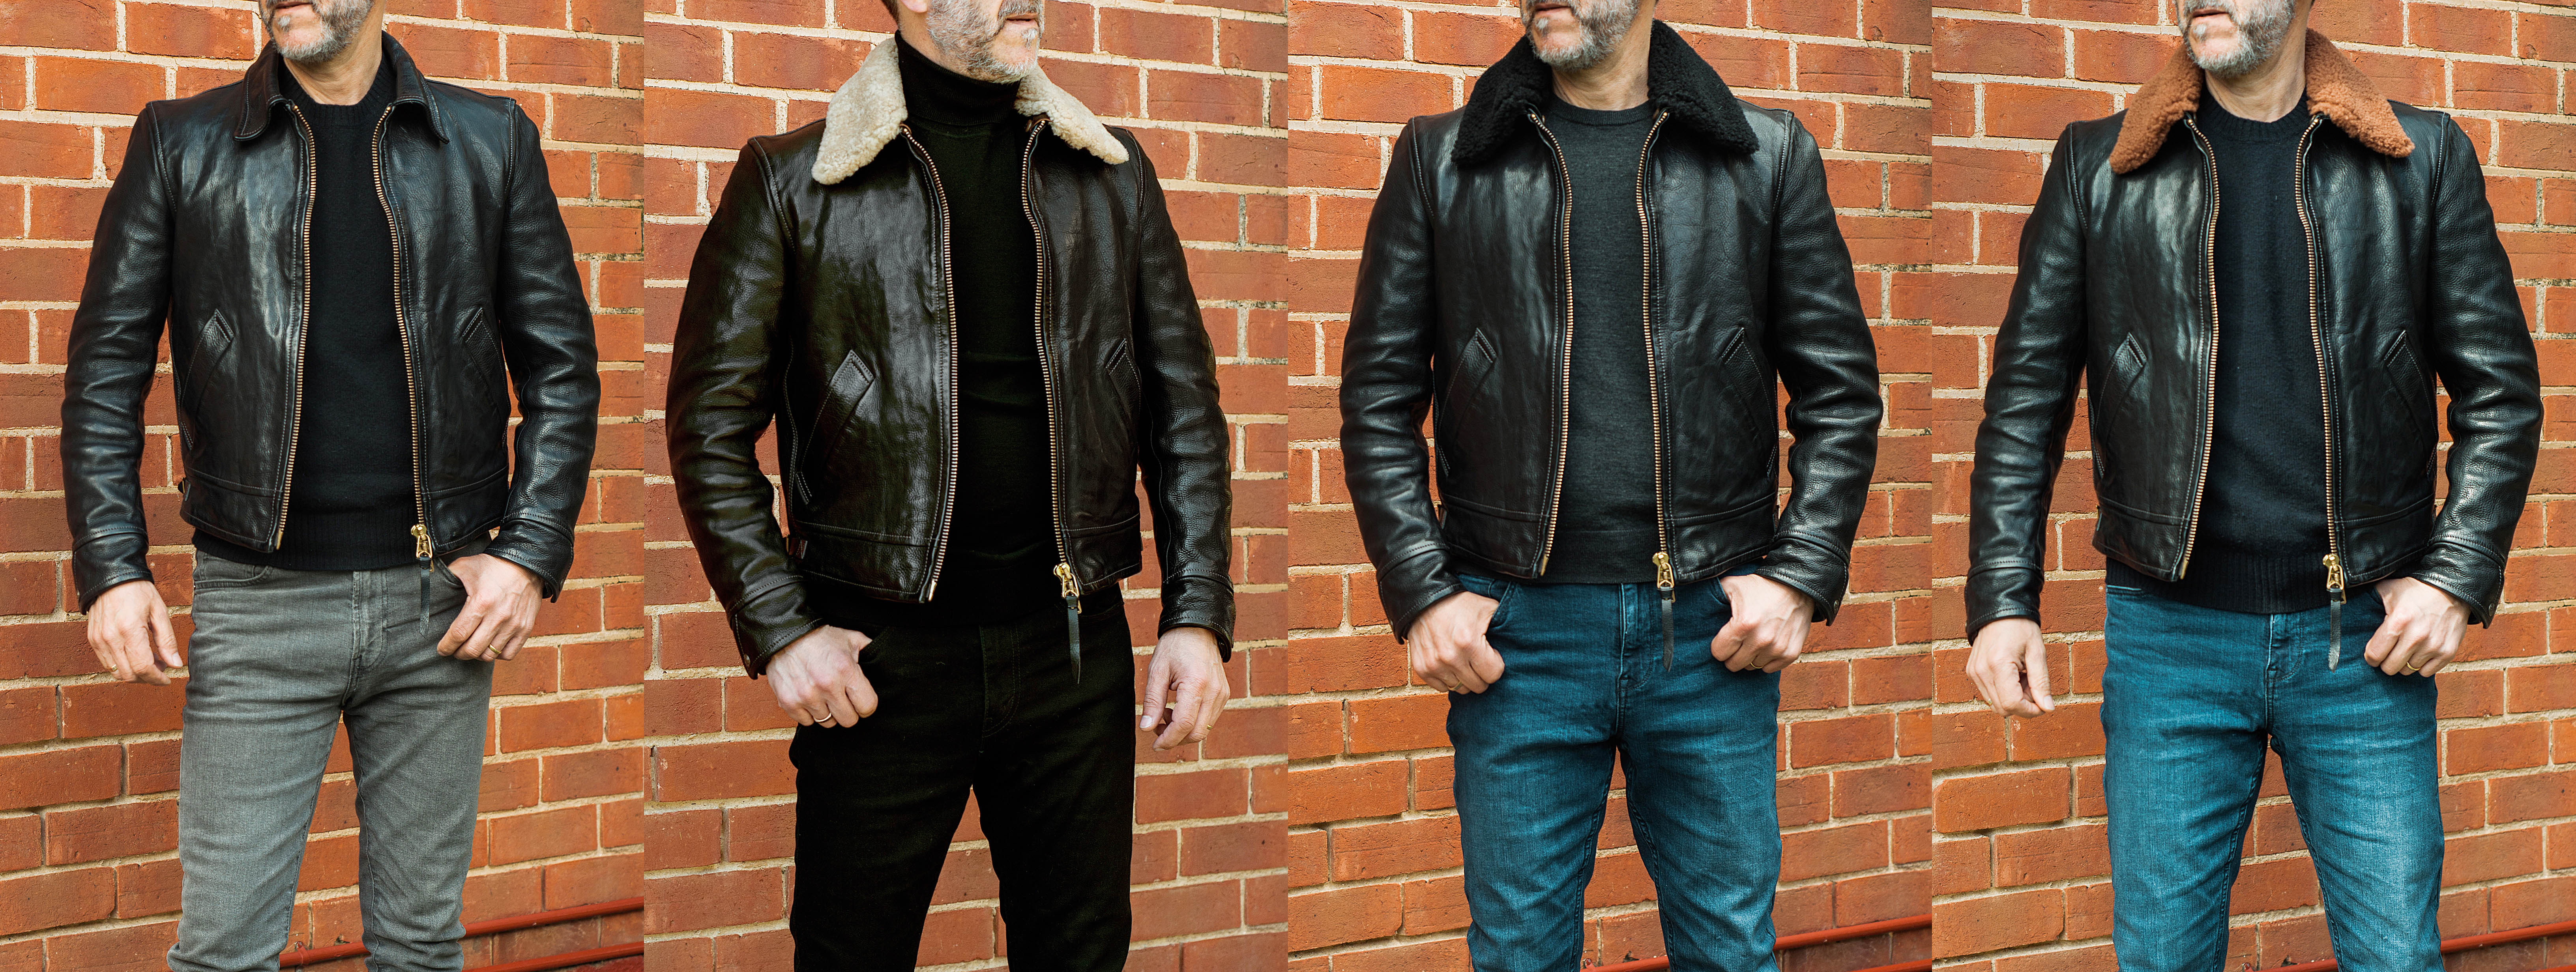 Thedi Leather Jacket code -127996 - 4 looks 2 .jpg